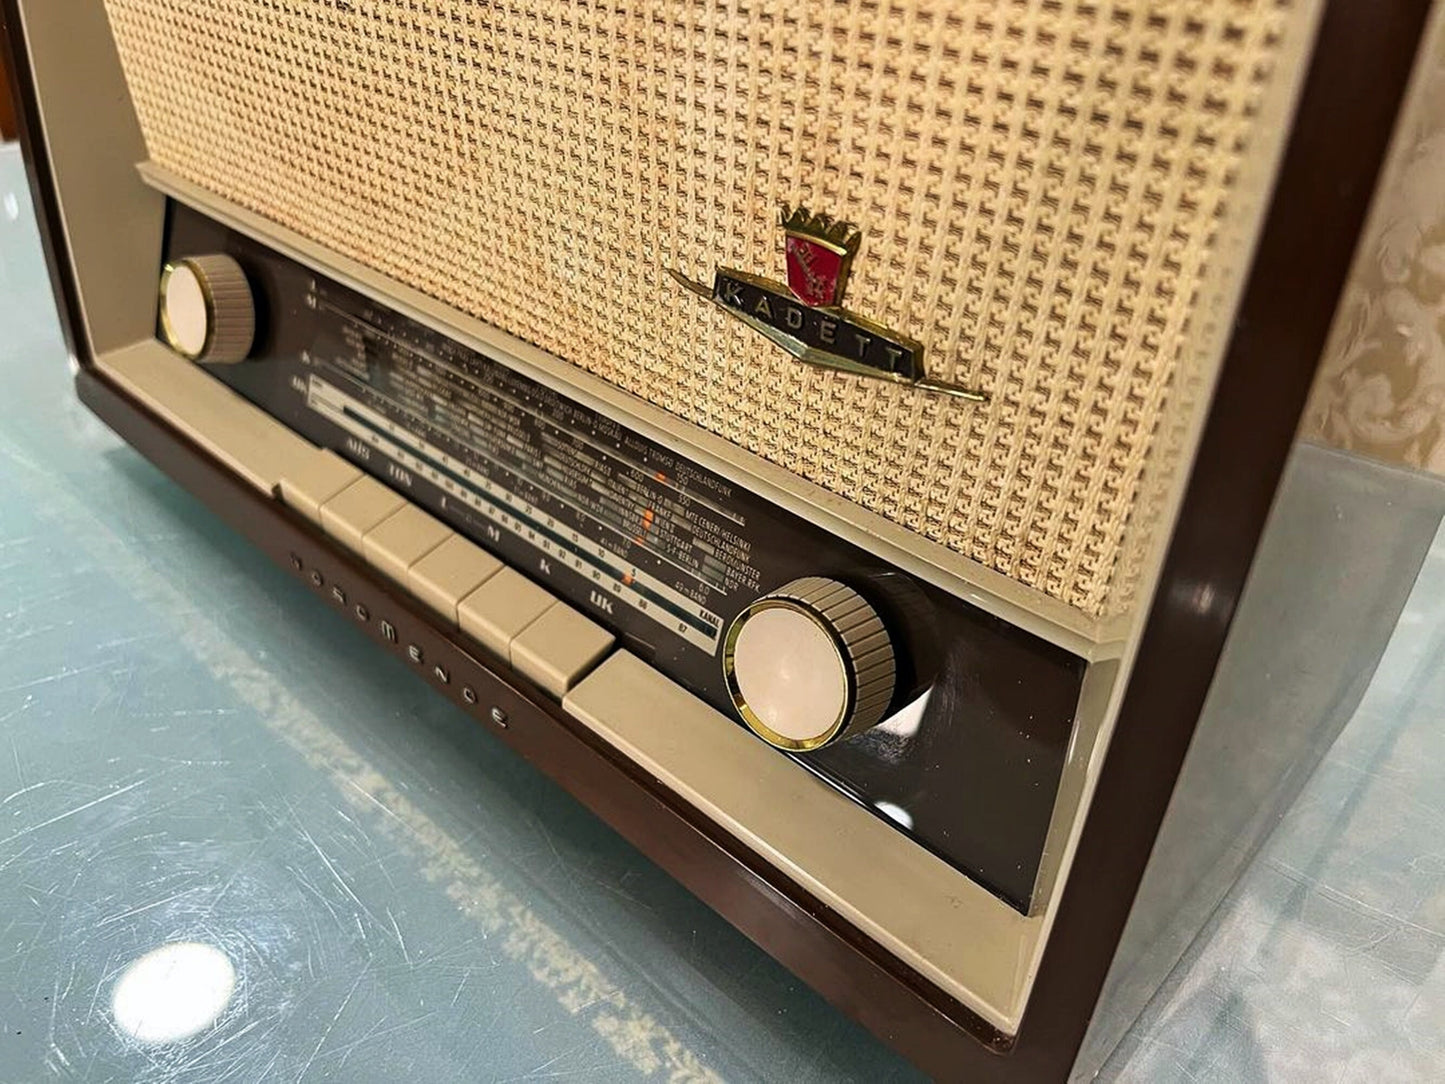 Nordmende Kadett Bakalit Radio: Vintage Mastery with Originality and Elegant Bakelite Design